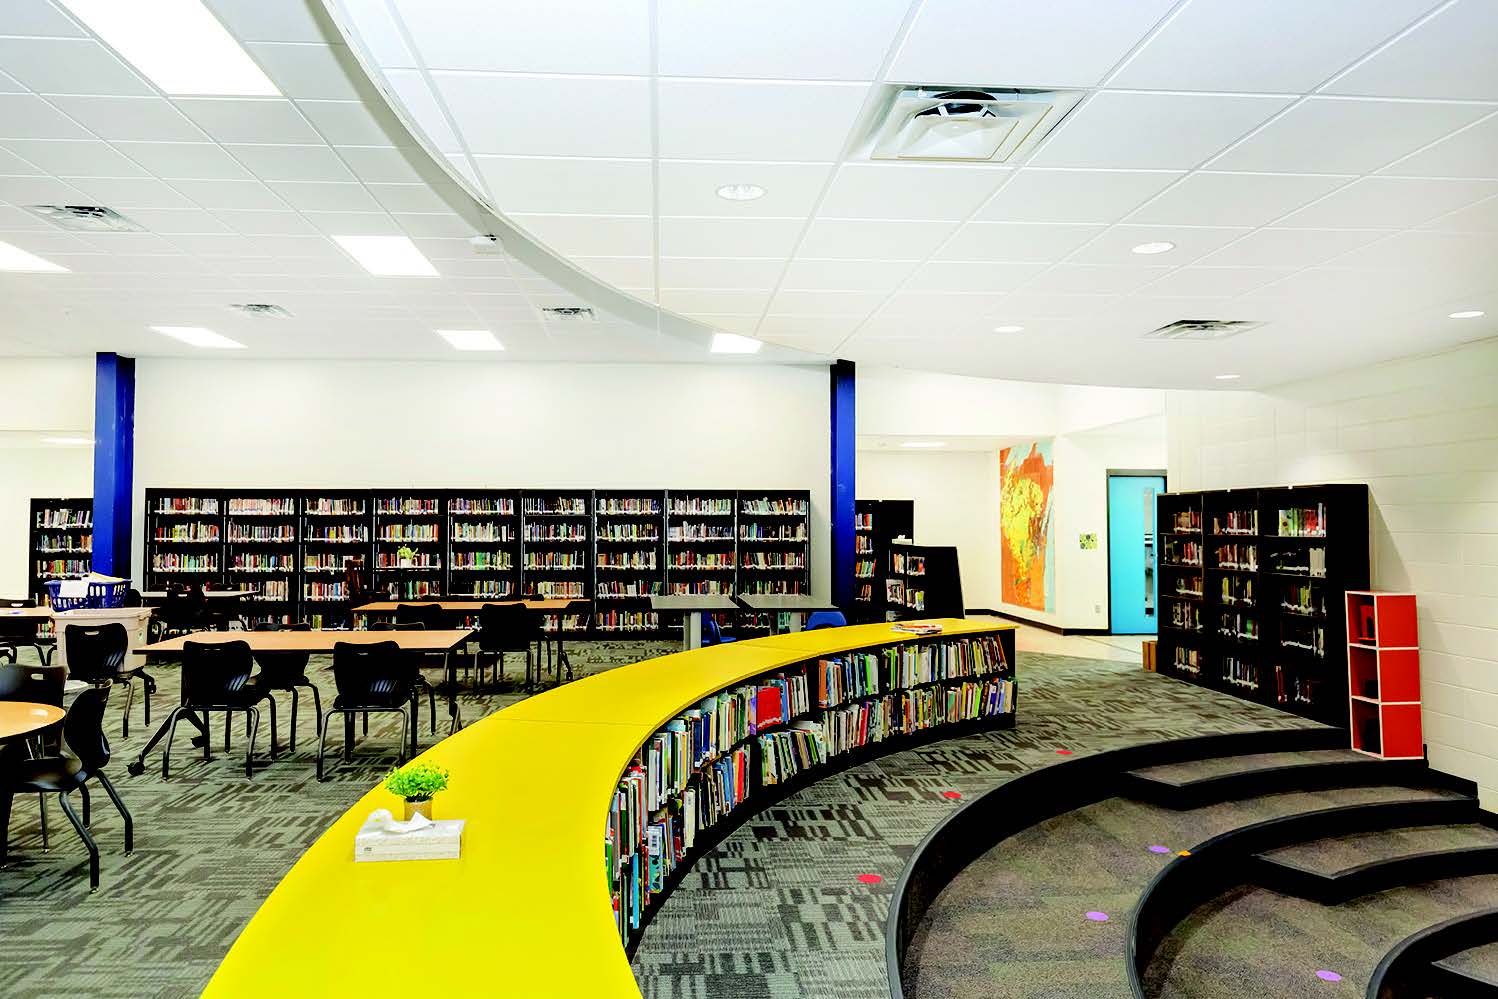 Elementary School Library